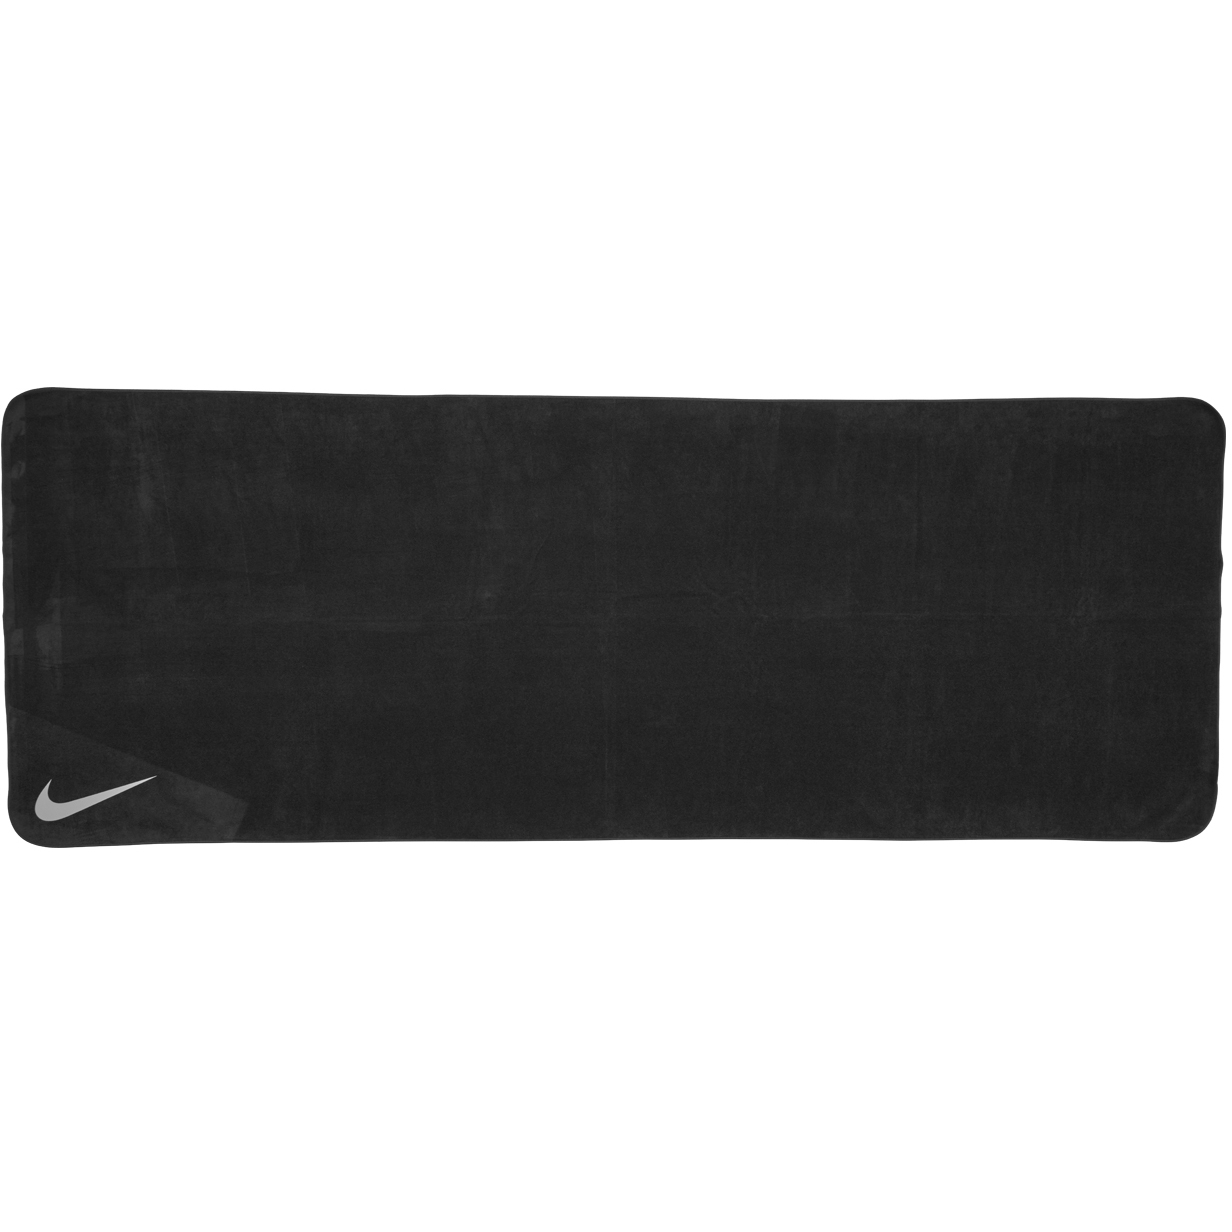 Productfoto van Nike Yoga Handdoek - anthracite/medium grey 012